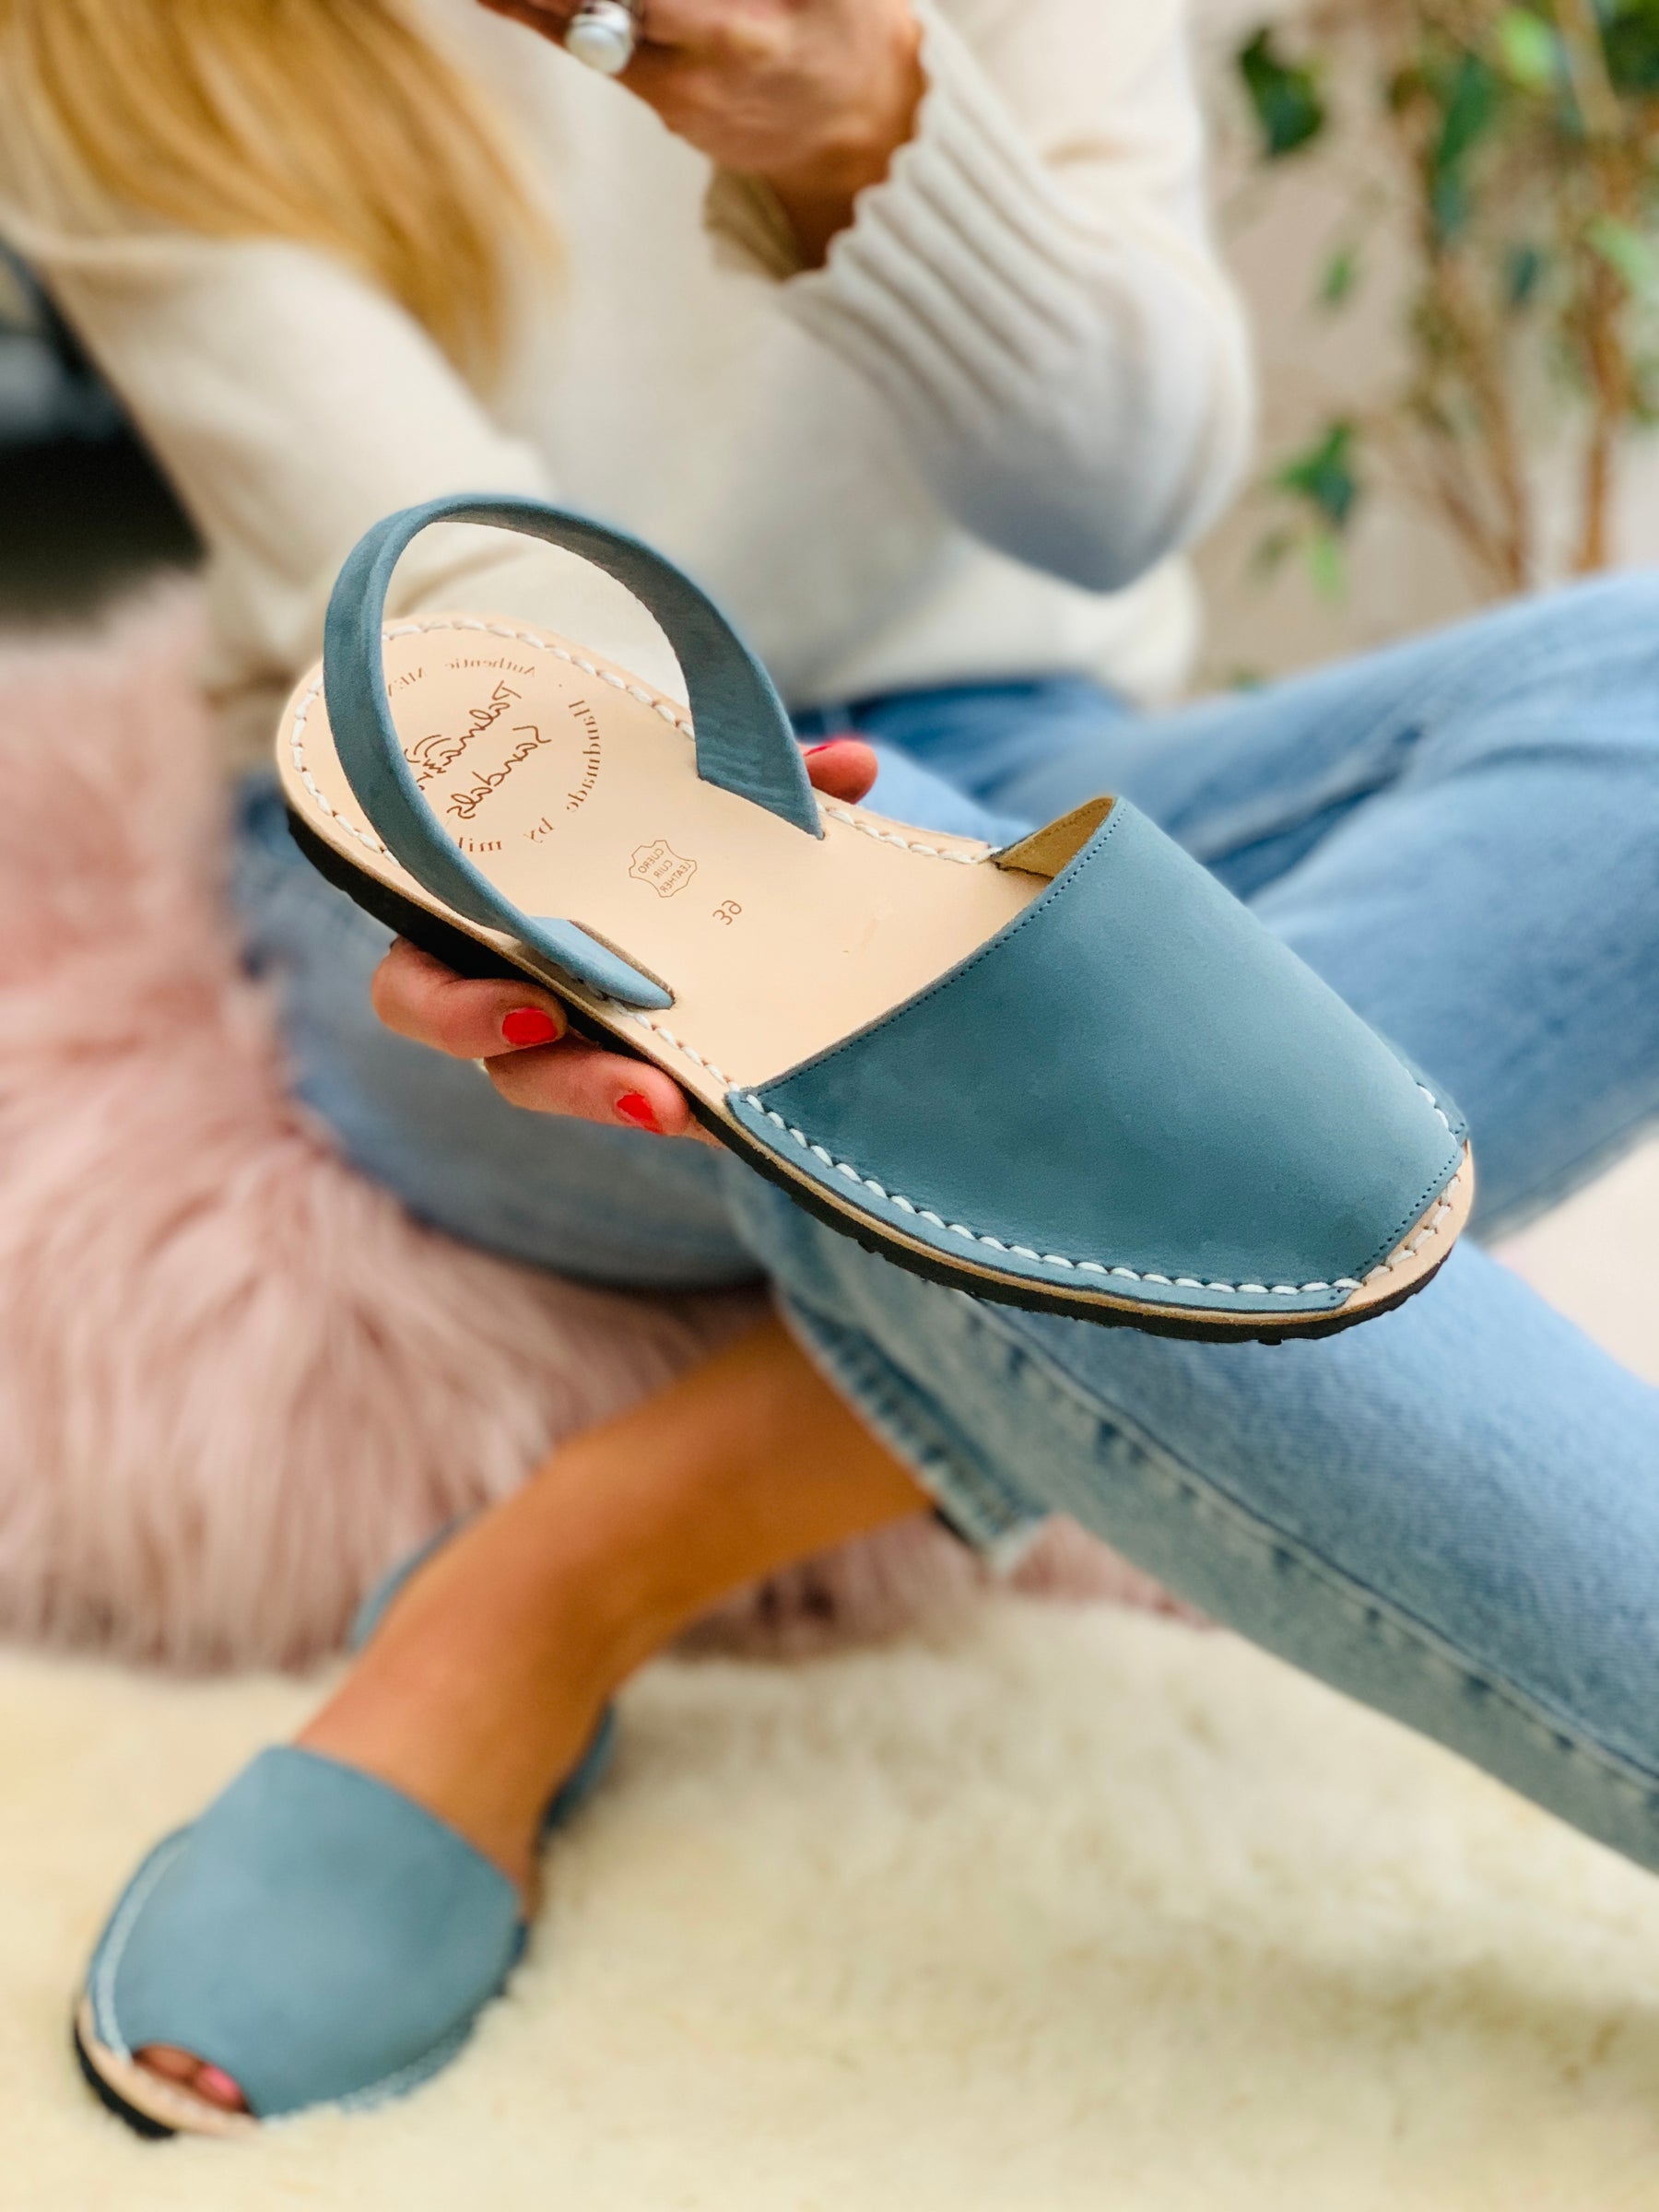 Dusky blue nubuck leather Menorcan Avarca sandals with sling back heel strap